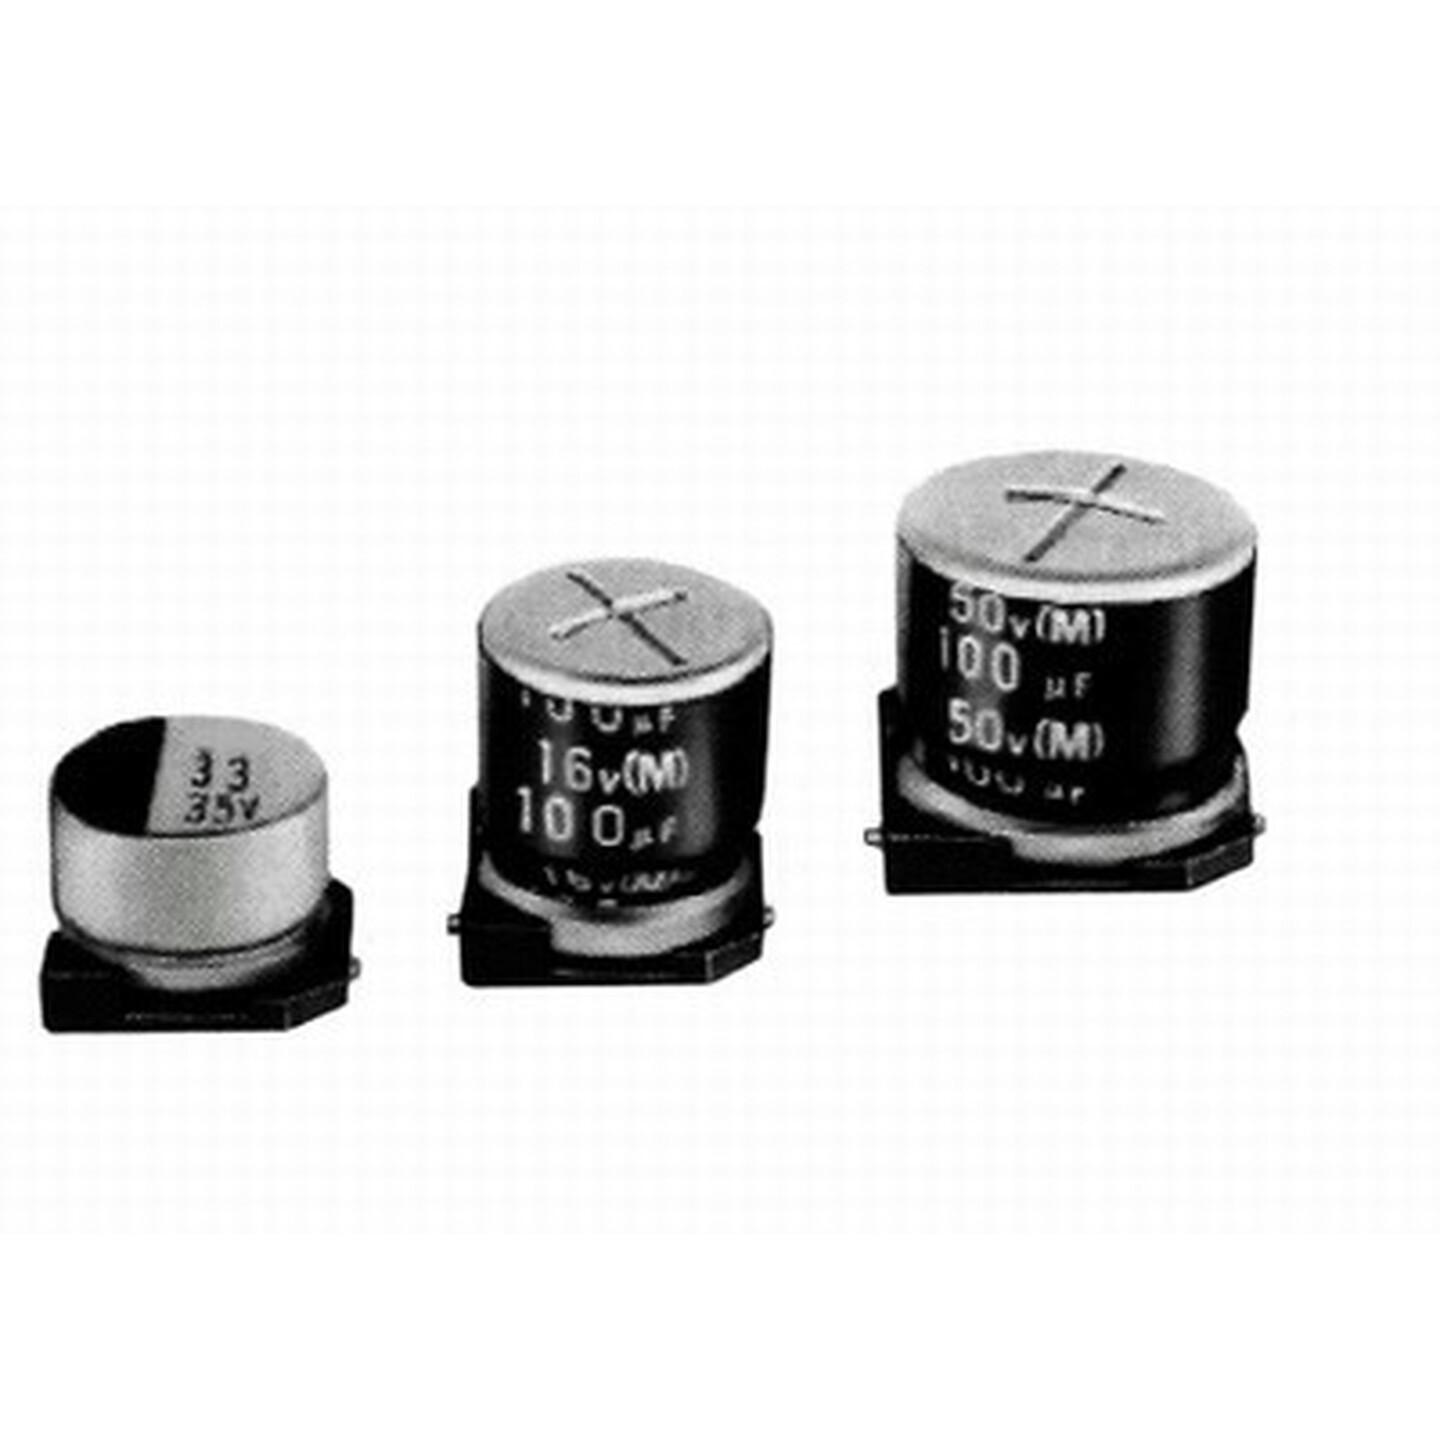 SMD Capacitor Electrolytic 100uF 16V - Pack 10